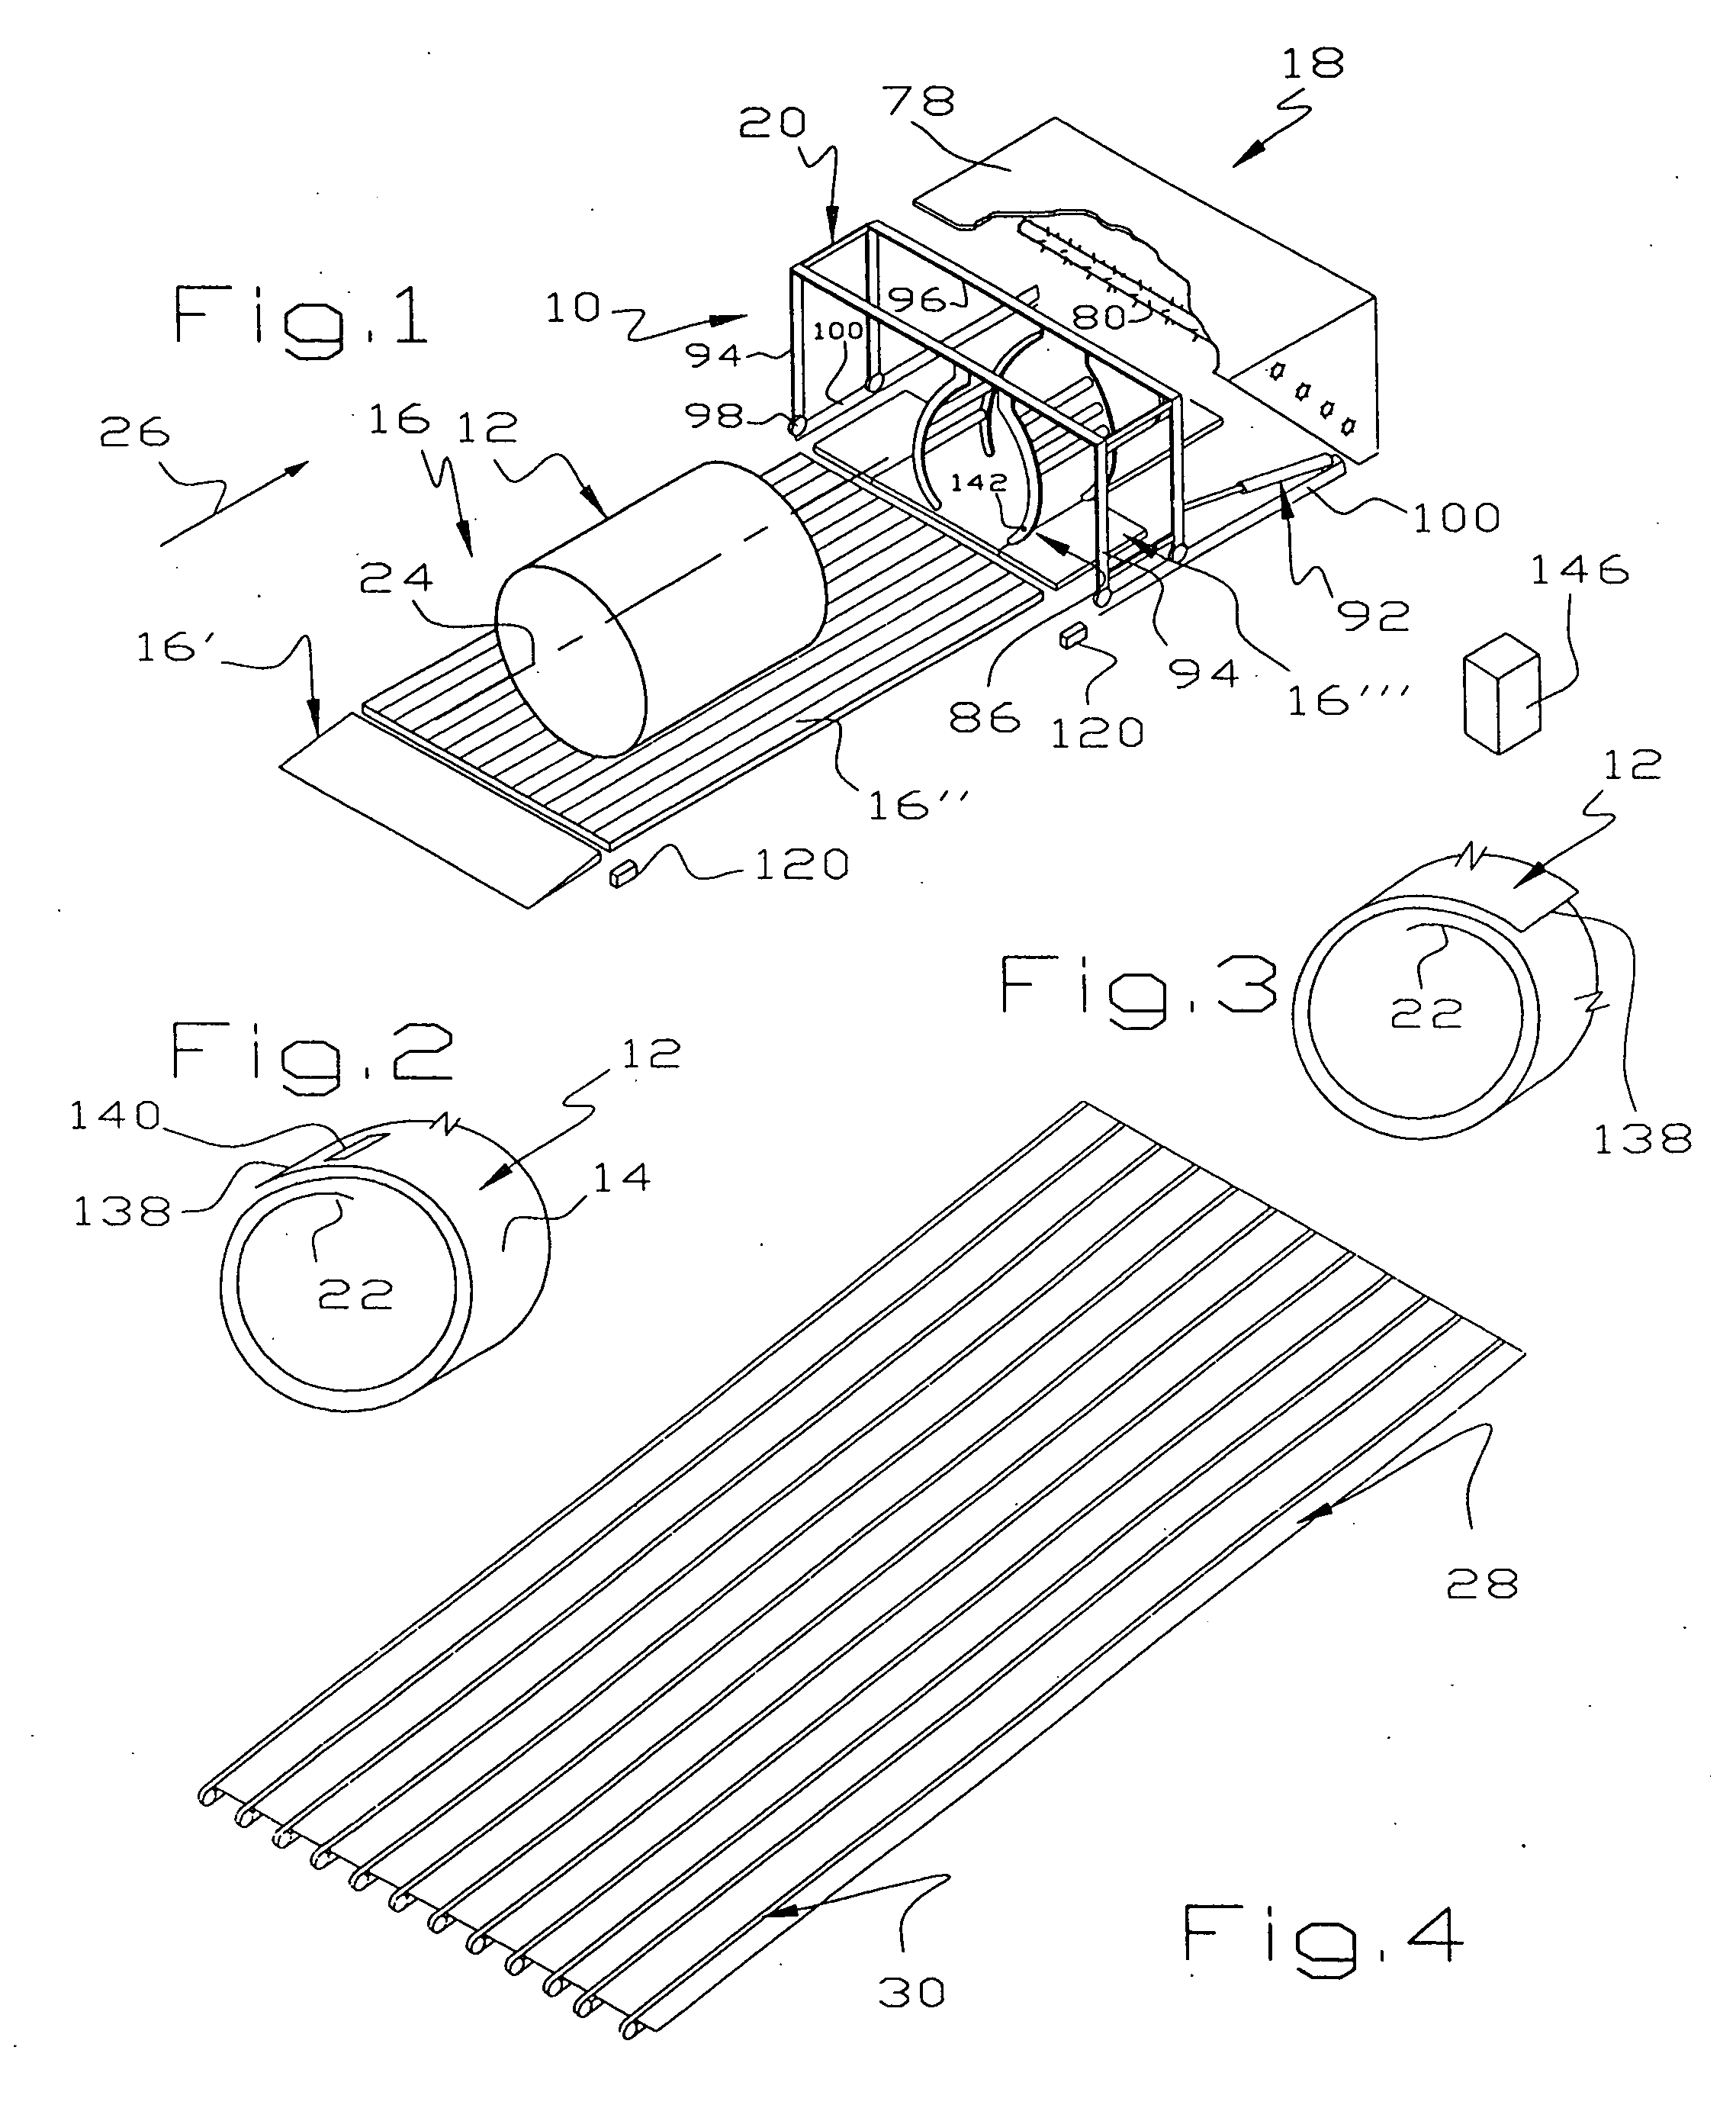 Handling cylindrical and rectangular modules